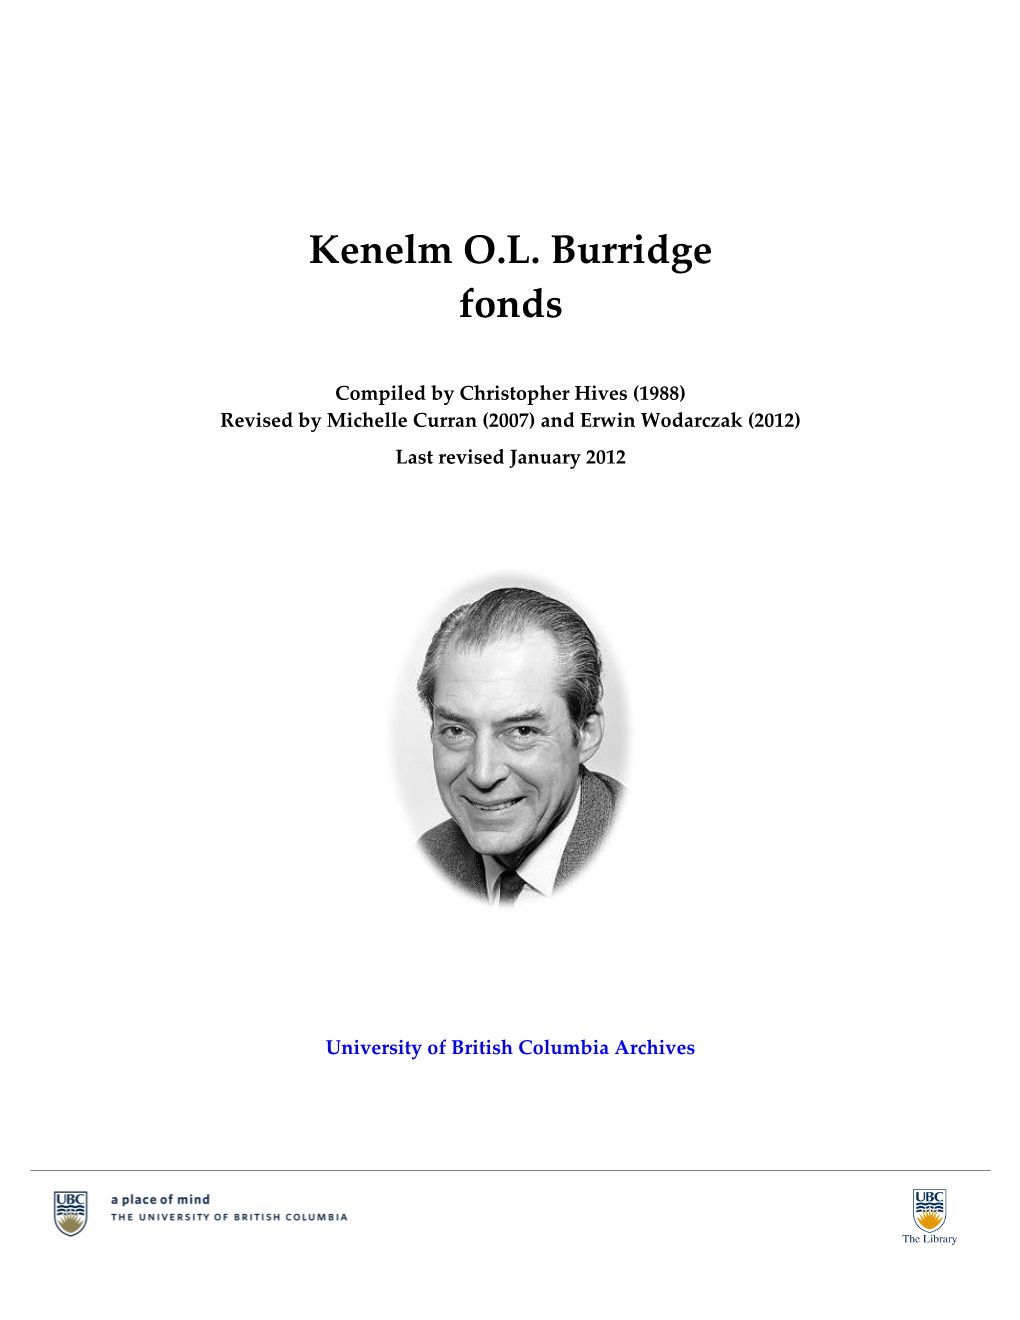 Kenelm O.L. Burridge Fonds